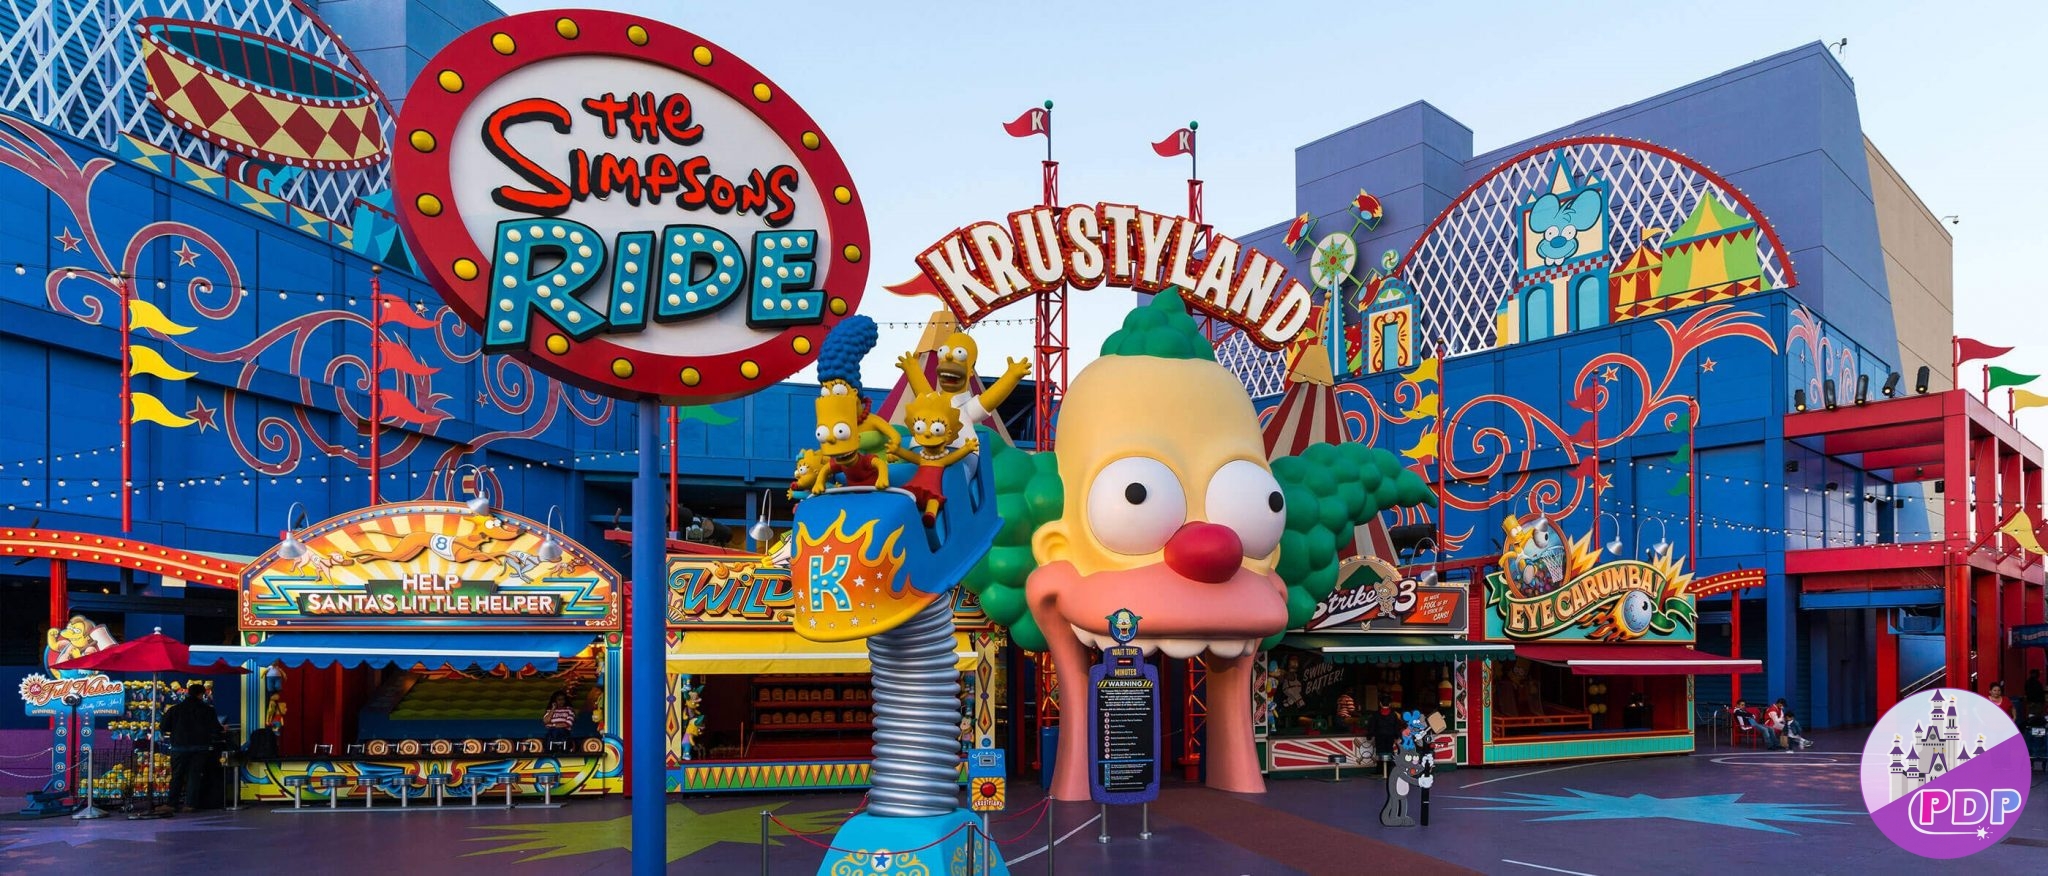 Springfield in Orlando - Simpsons Area at Universal Studios